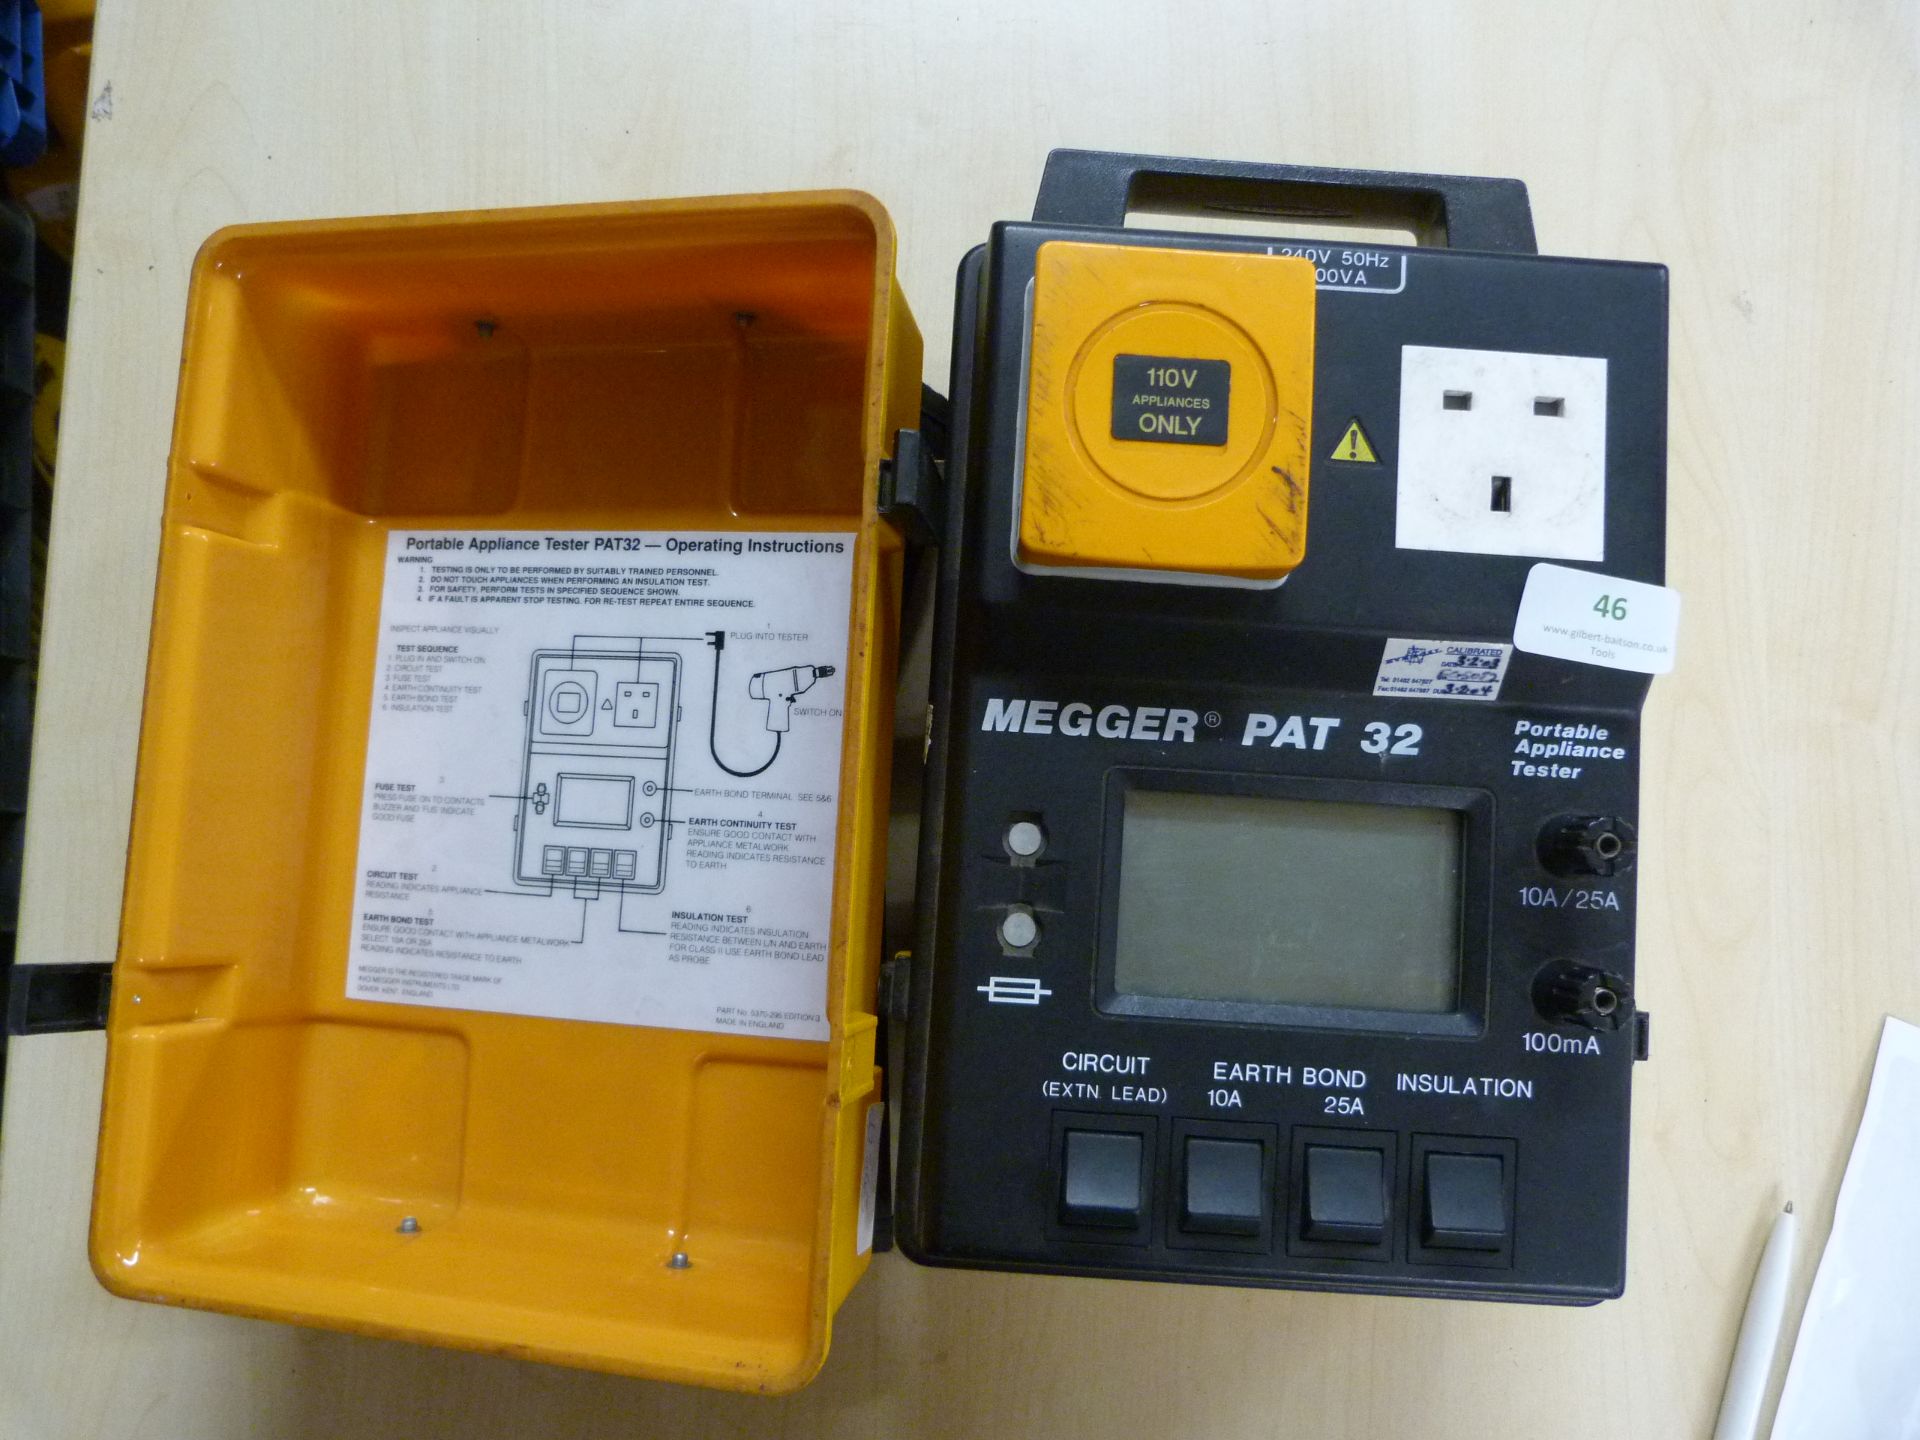 *Megger PAT 32 Portable Appliance Tester 219-579